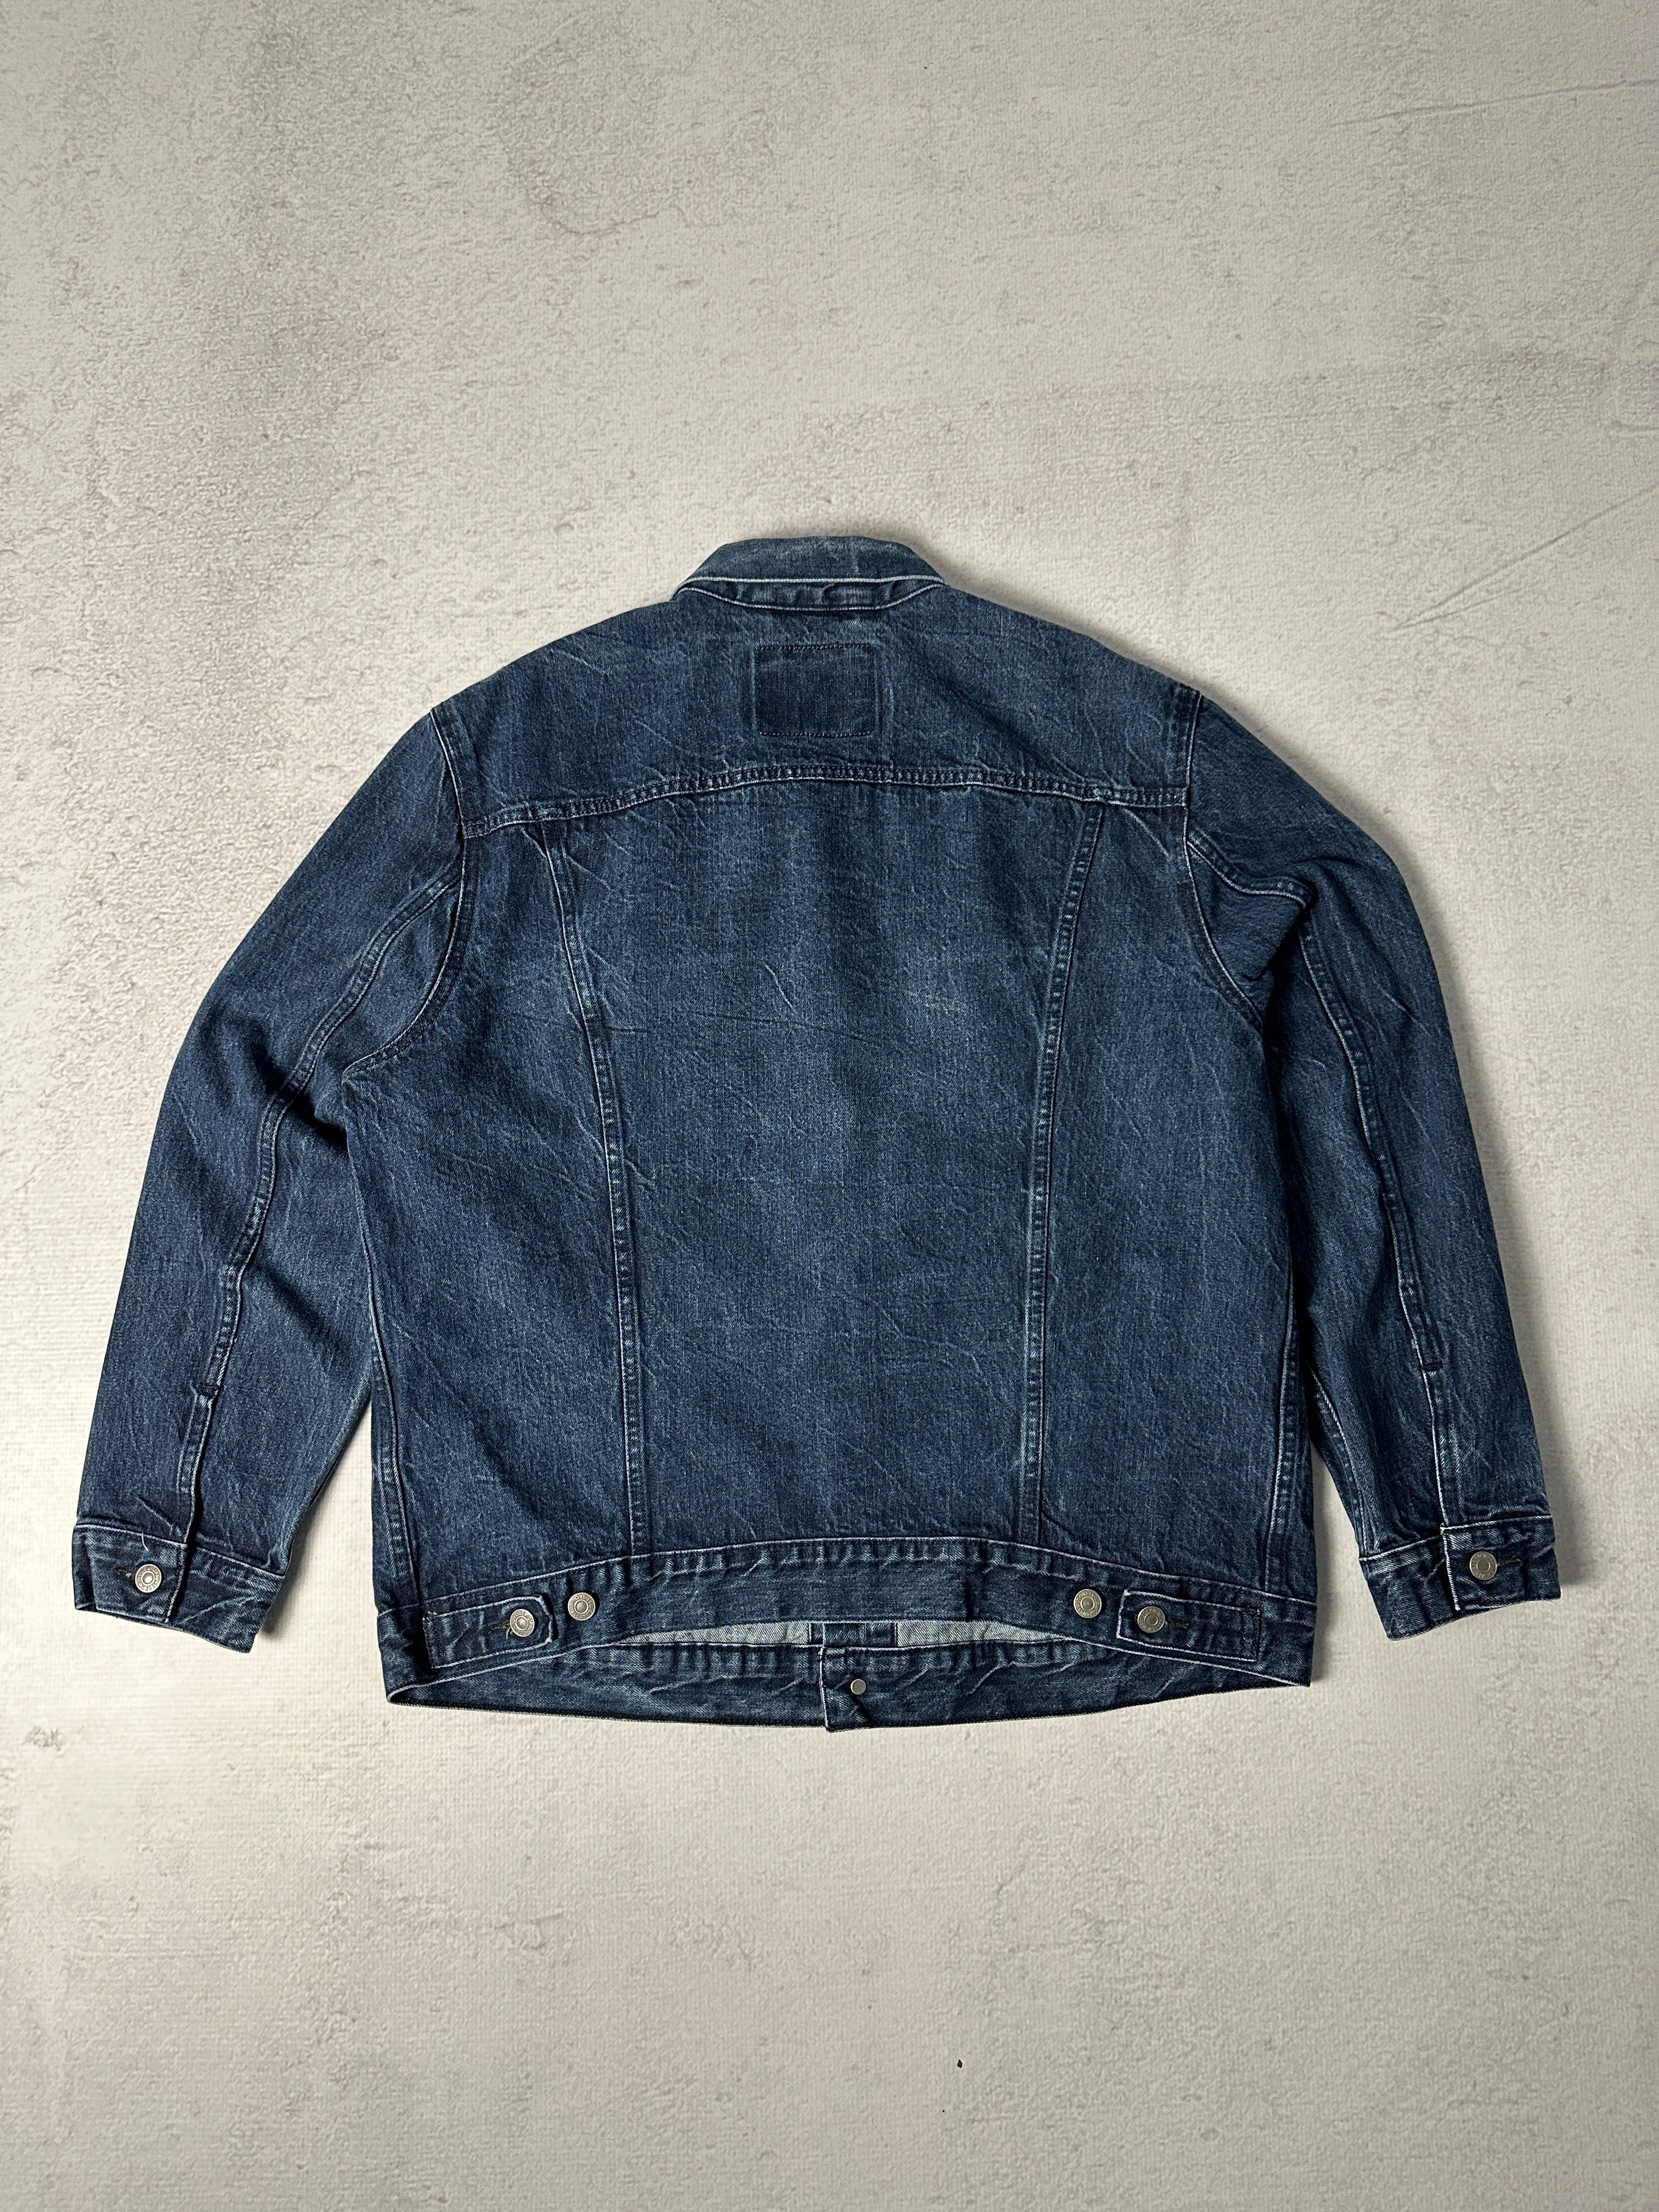 Vintage Levis Denim Jacket - Men's XL